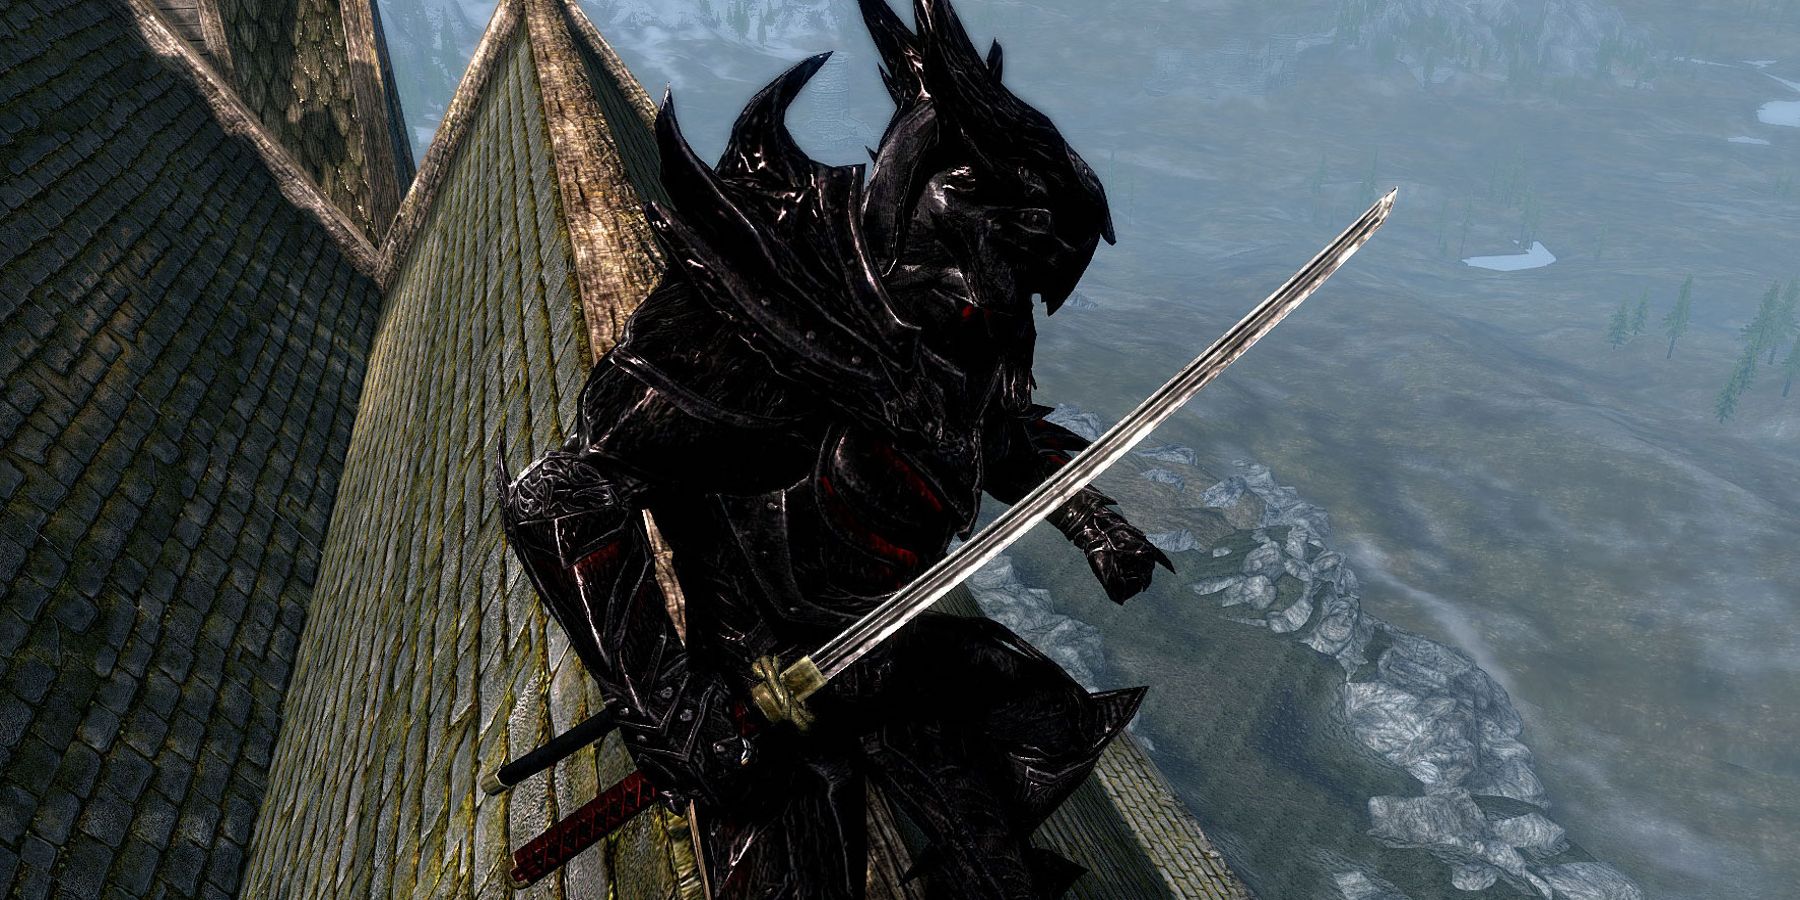 The Blades Sword in The Elder Scrolls V: Skyrim.